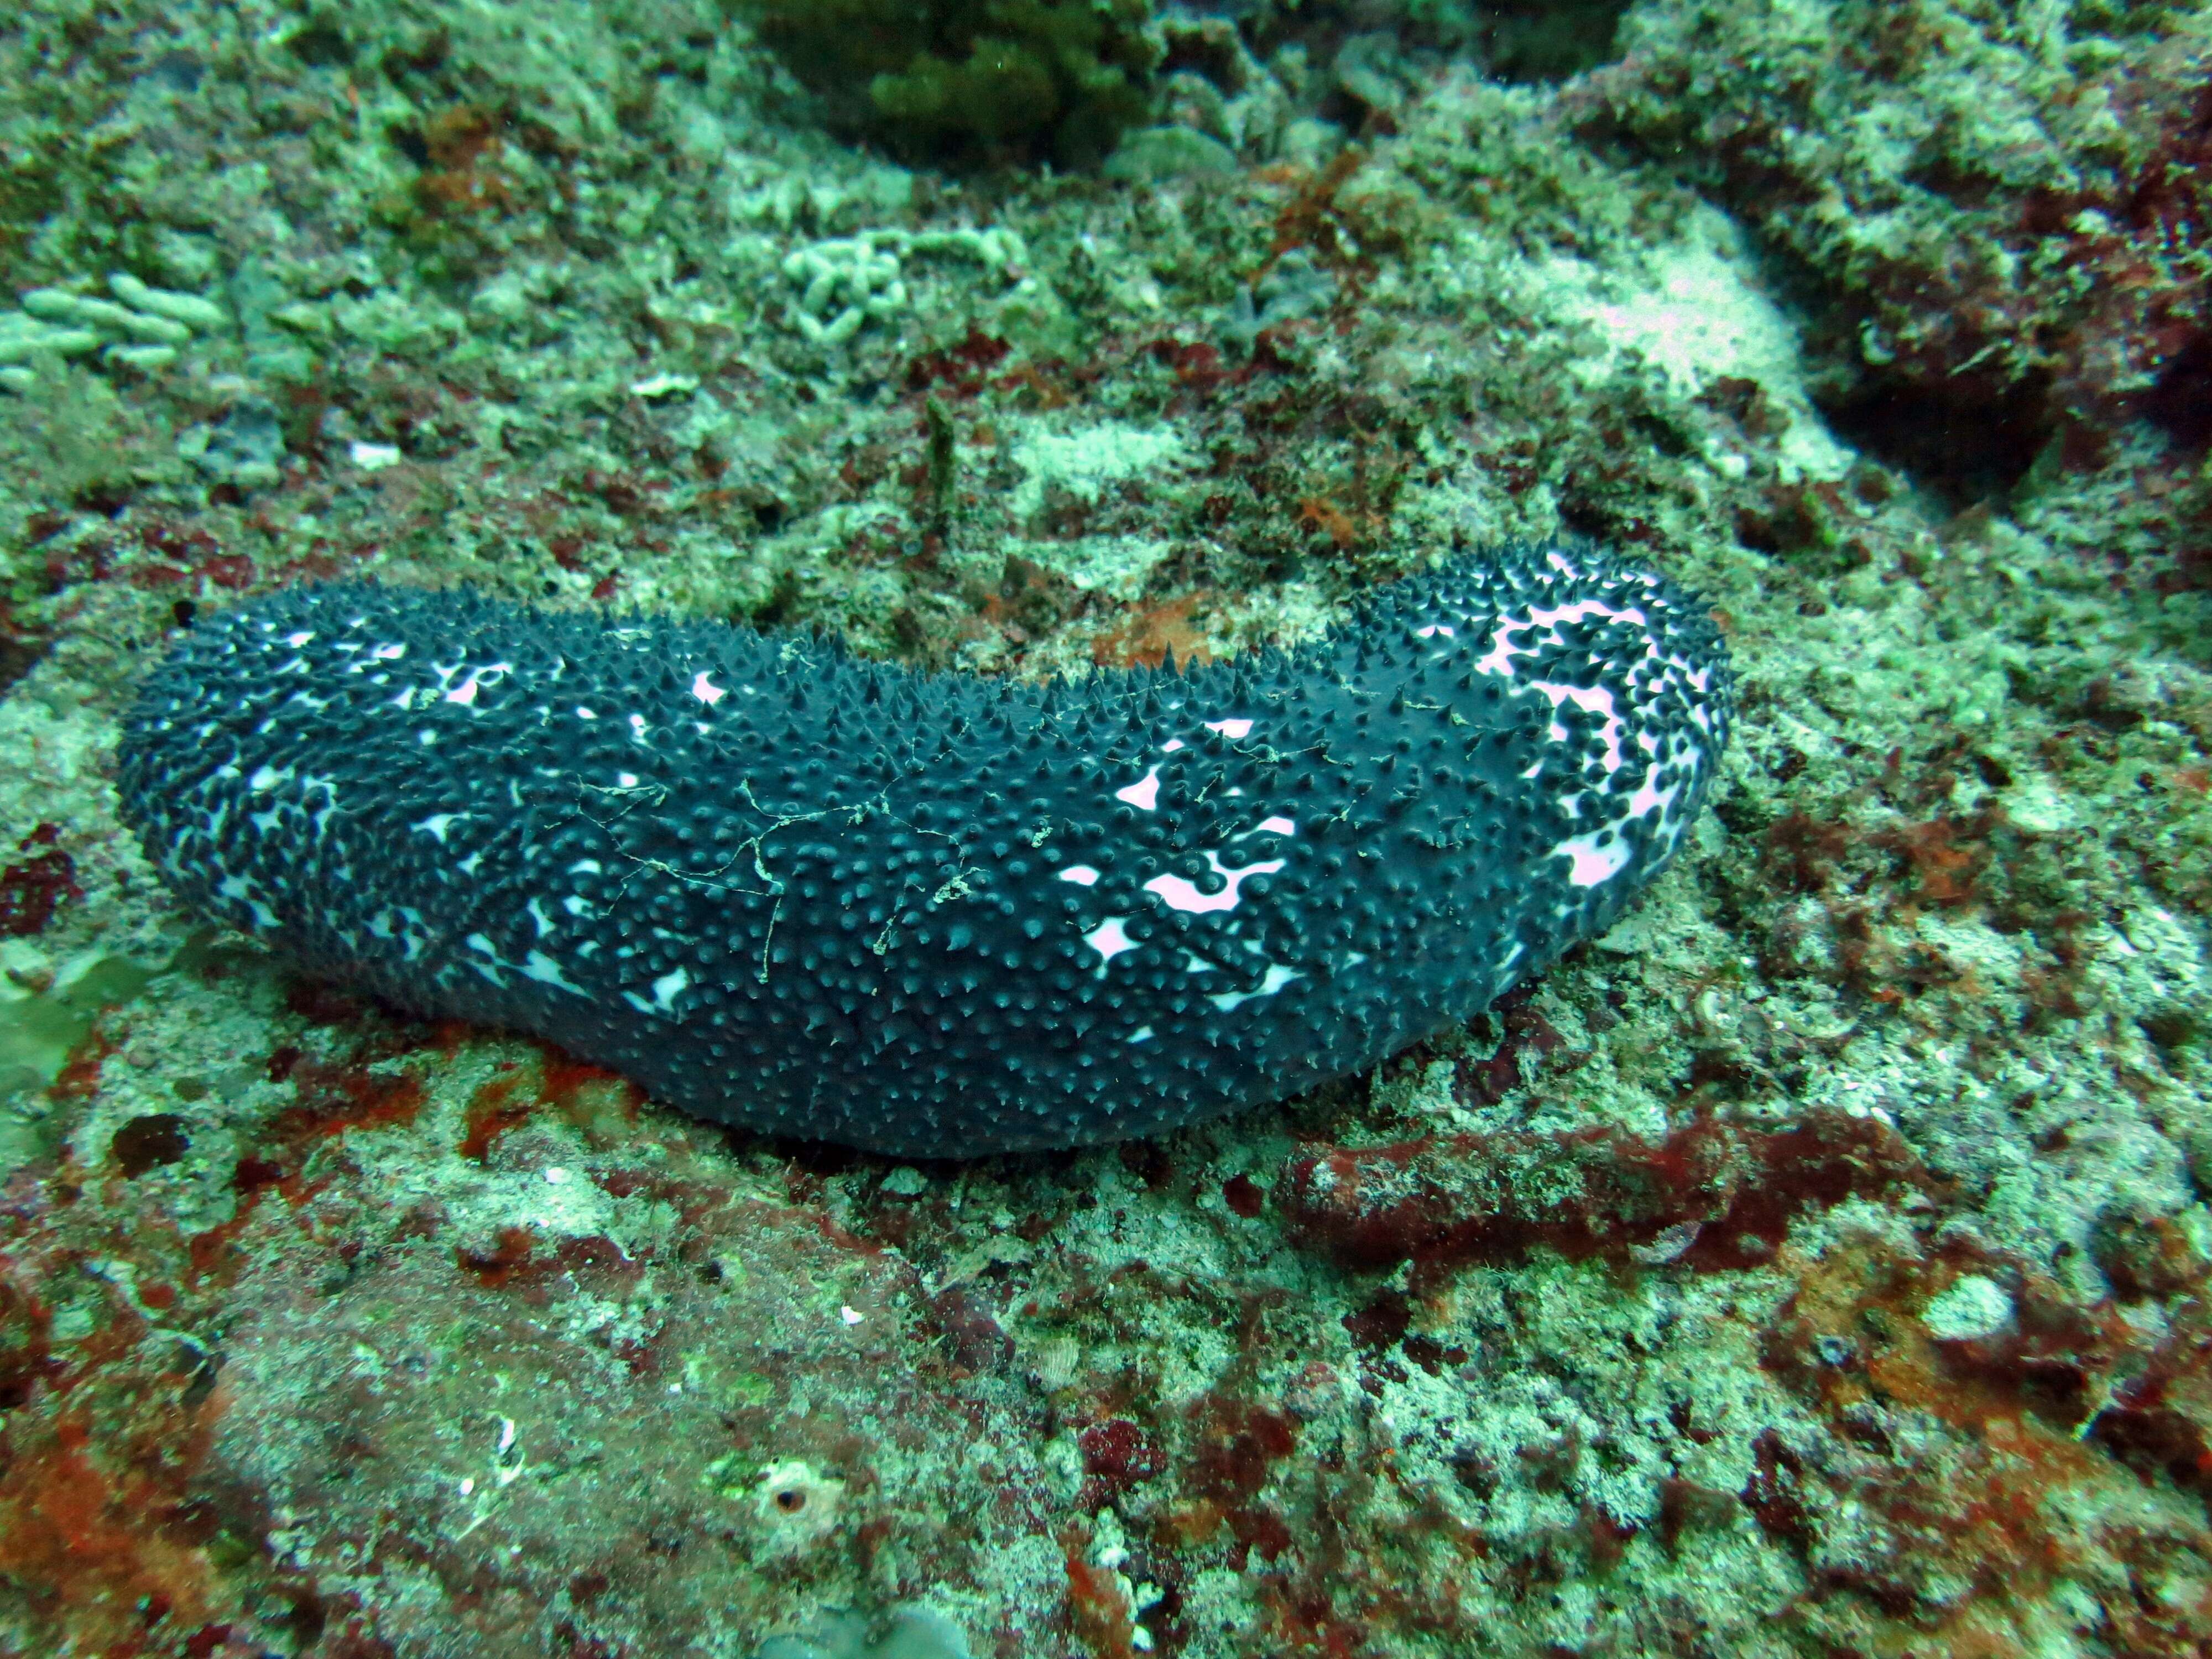 Image of Blue Sea Cucumber